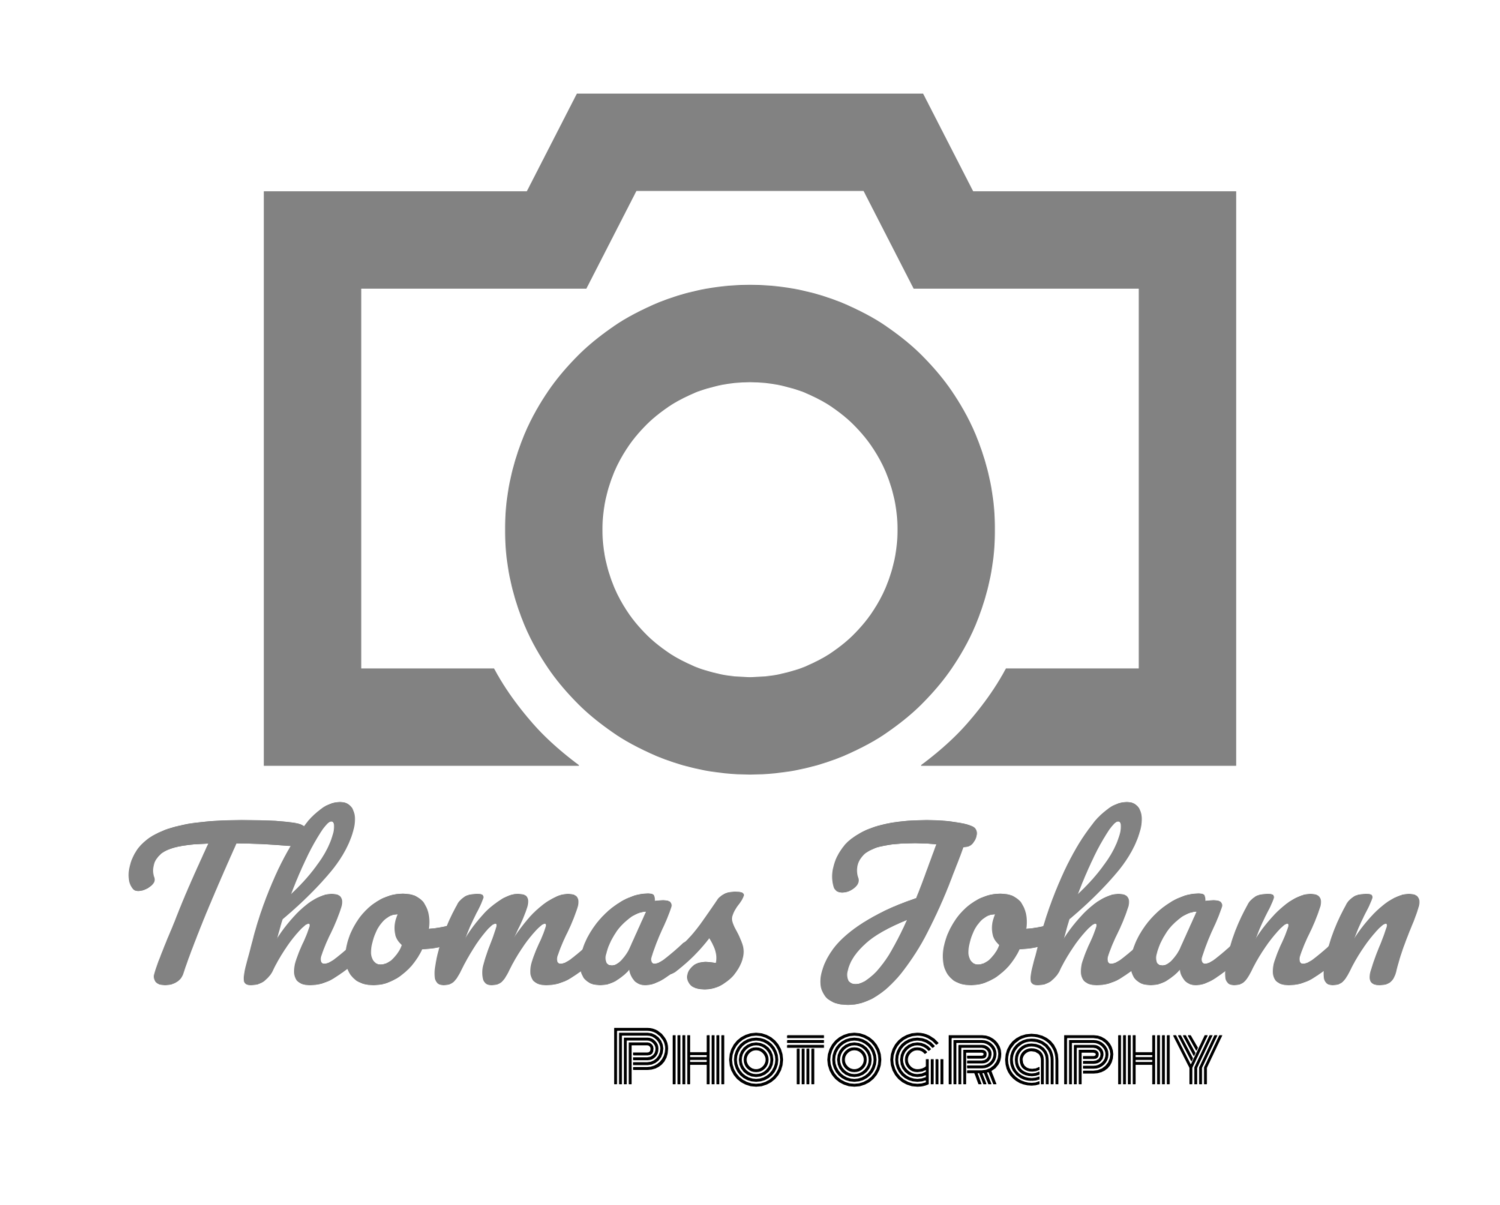 Thomas Johann Photography